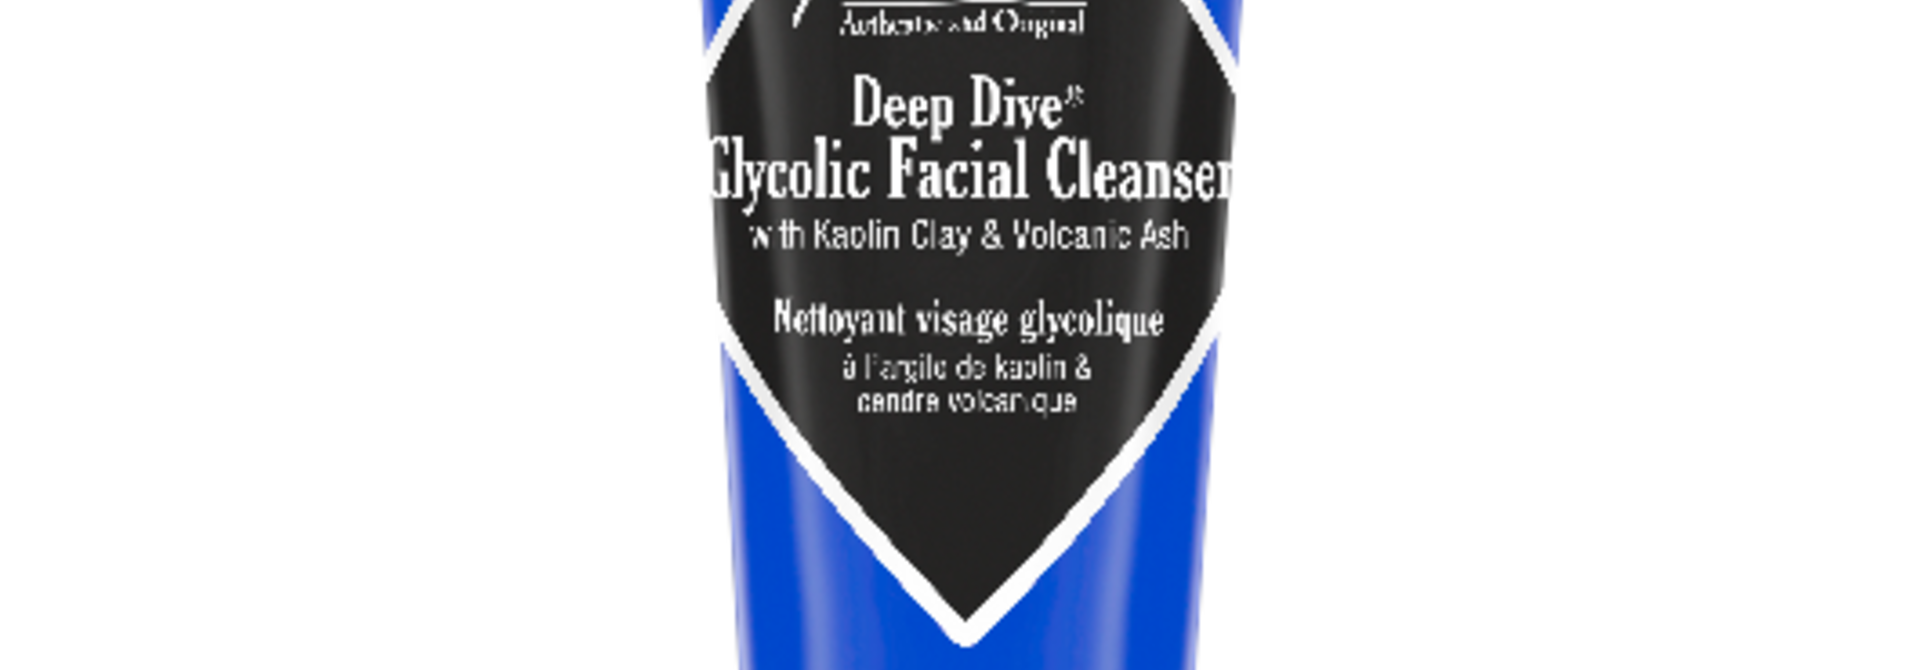 Deep Dive Glycolic Facial Cleanser | The Facial Skincare Collection